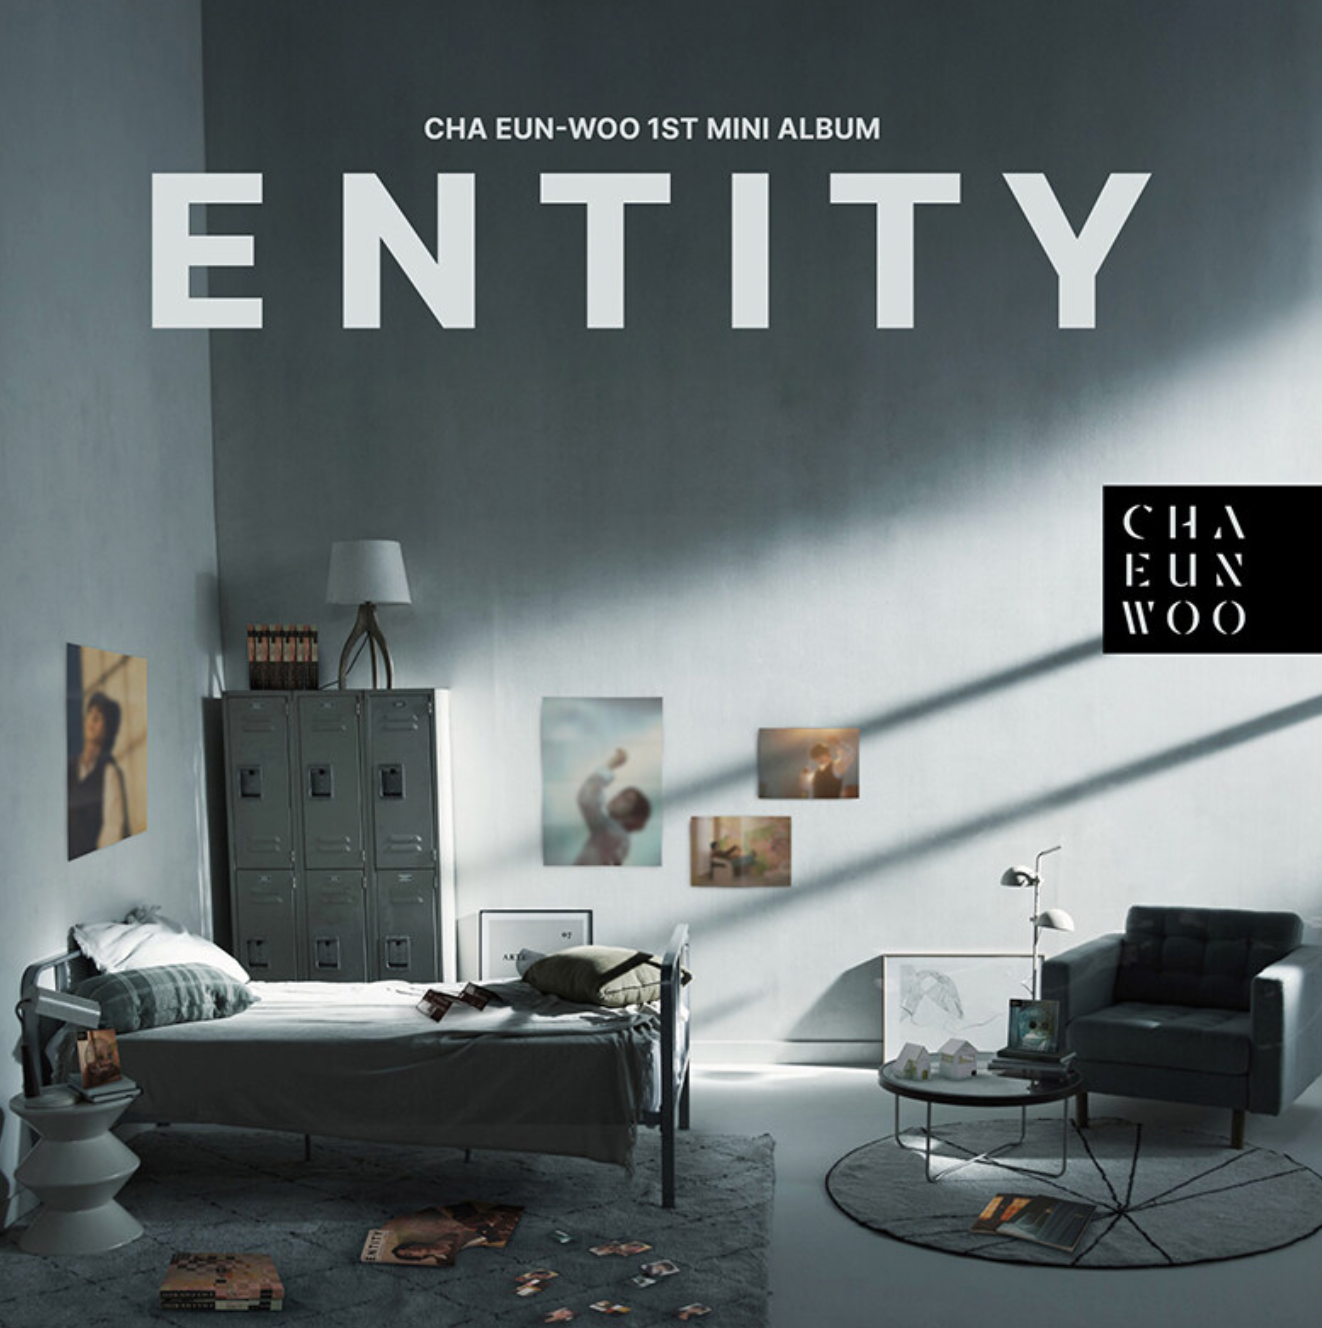 ASTRO Cha Eun-woo 1st Mini Album "ENTITY"